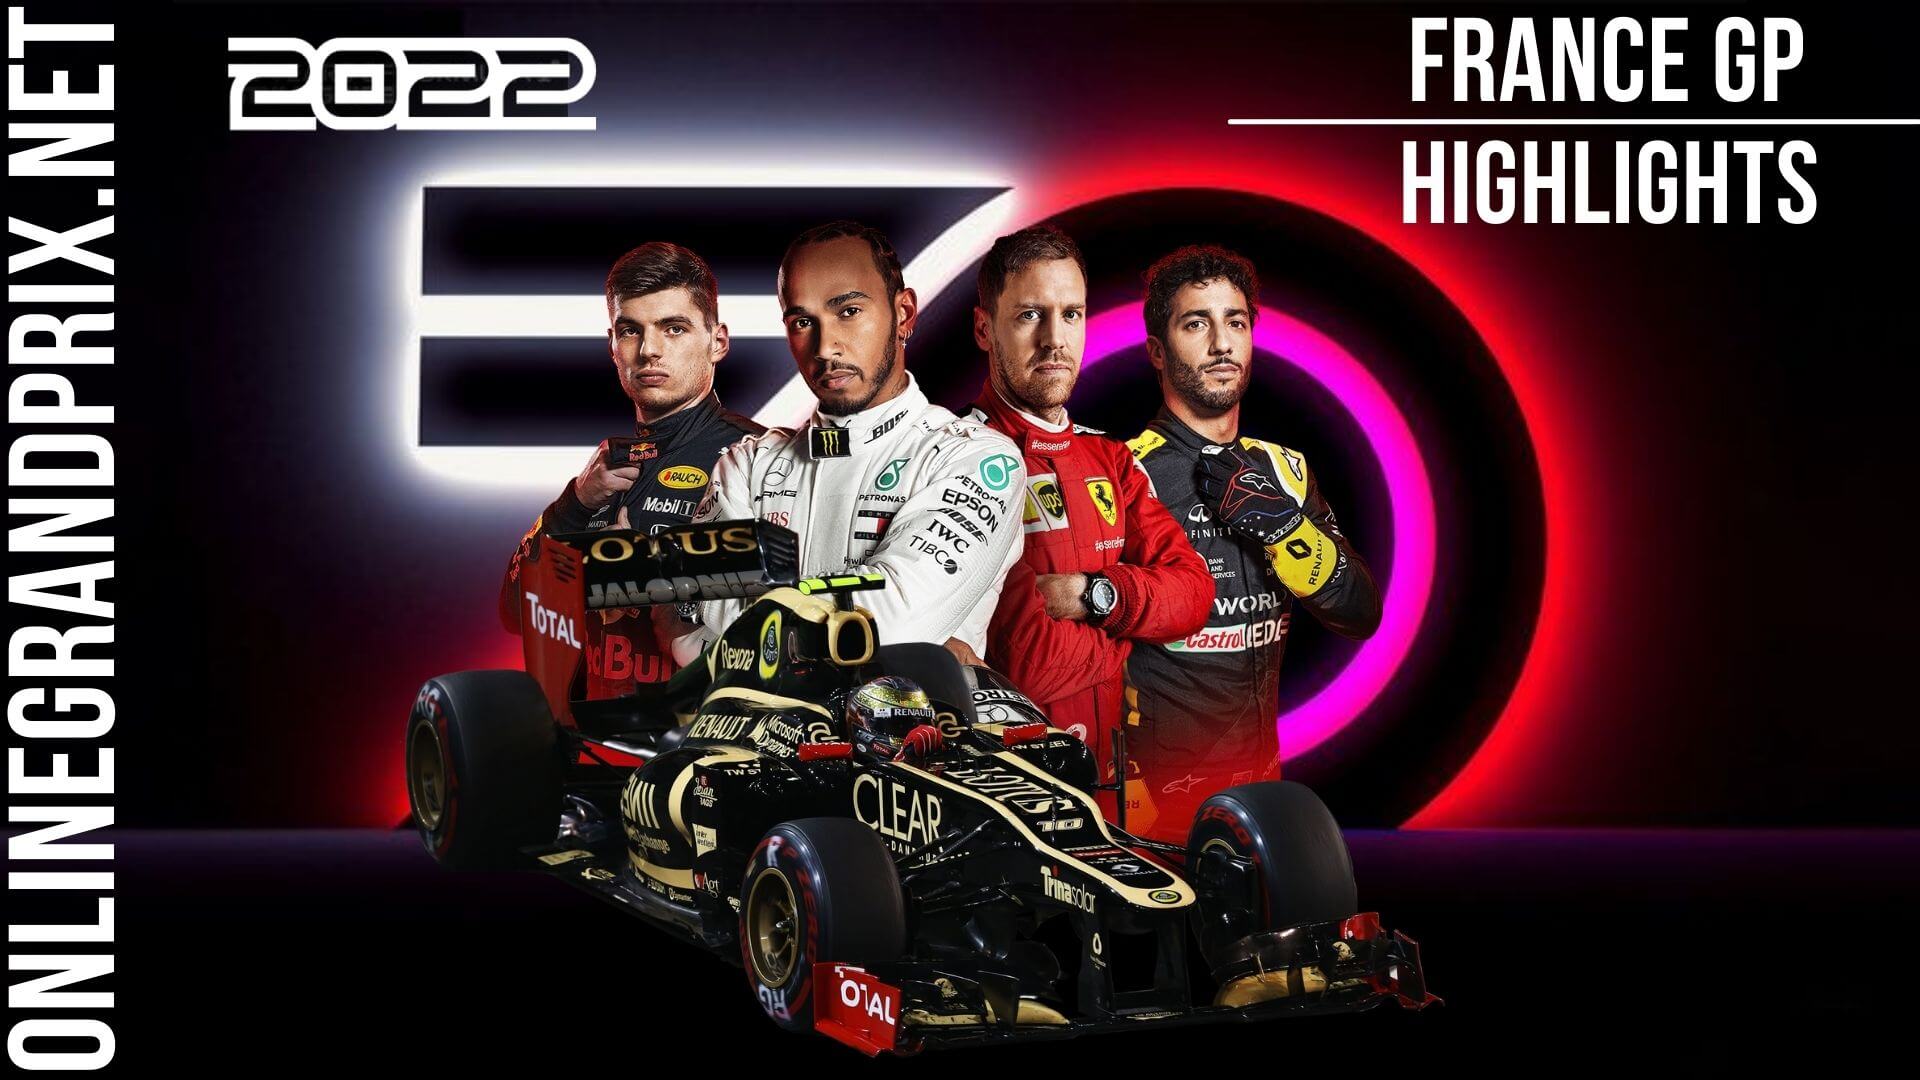 France GP F1 Highlights 2022